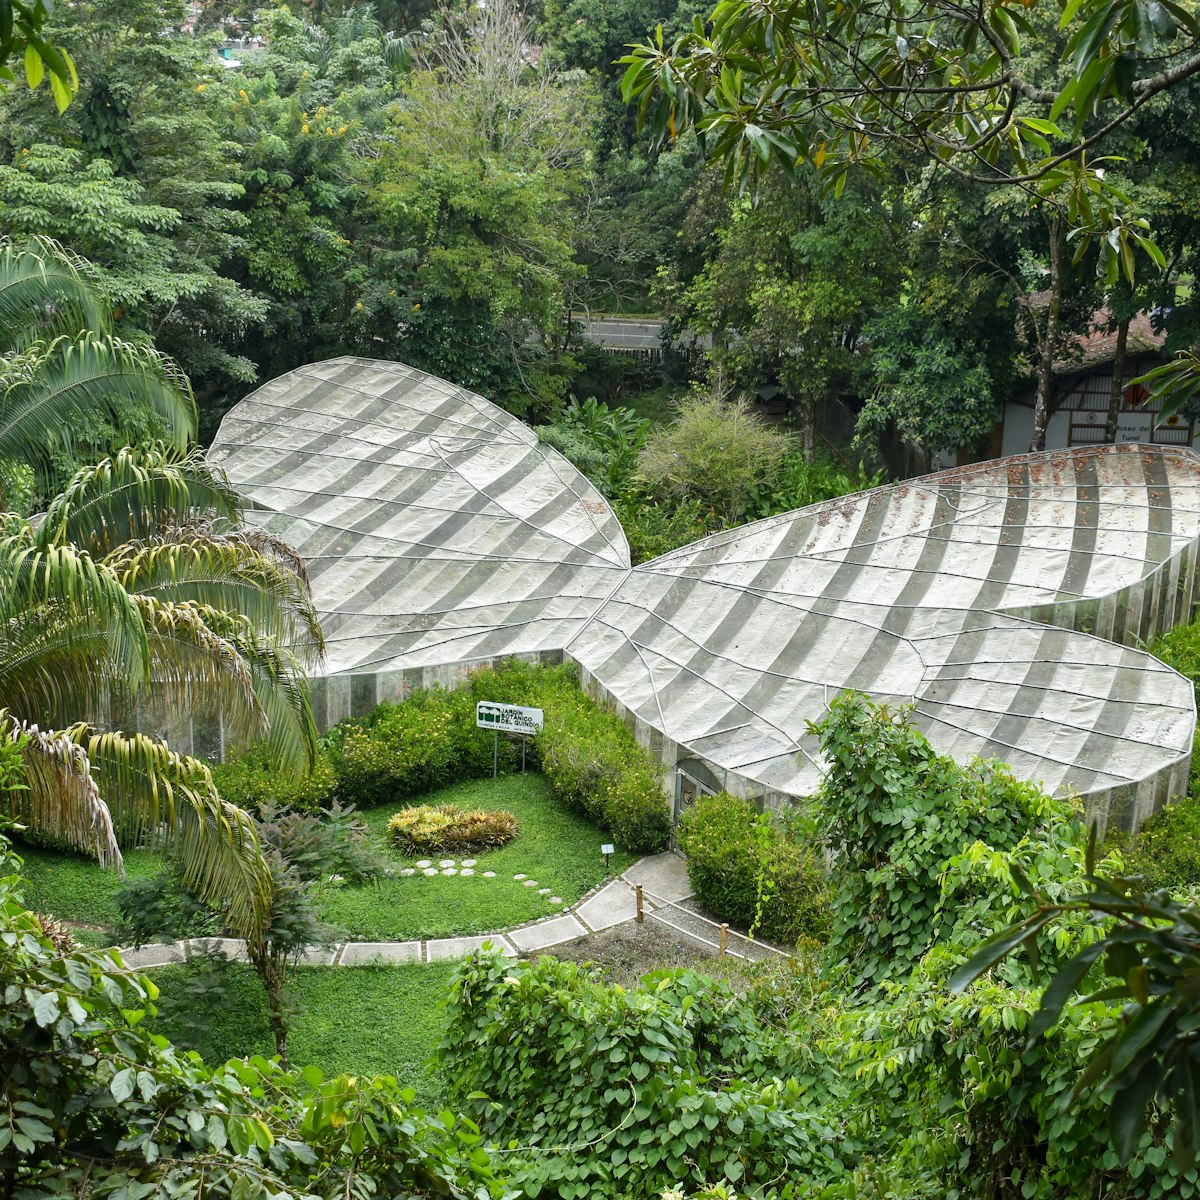 Butterfly Garden of the Quindio Botanical Garden.